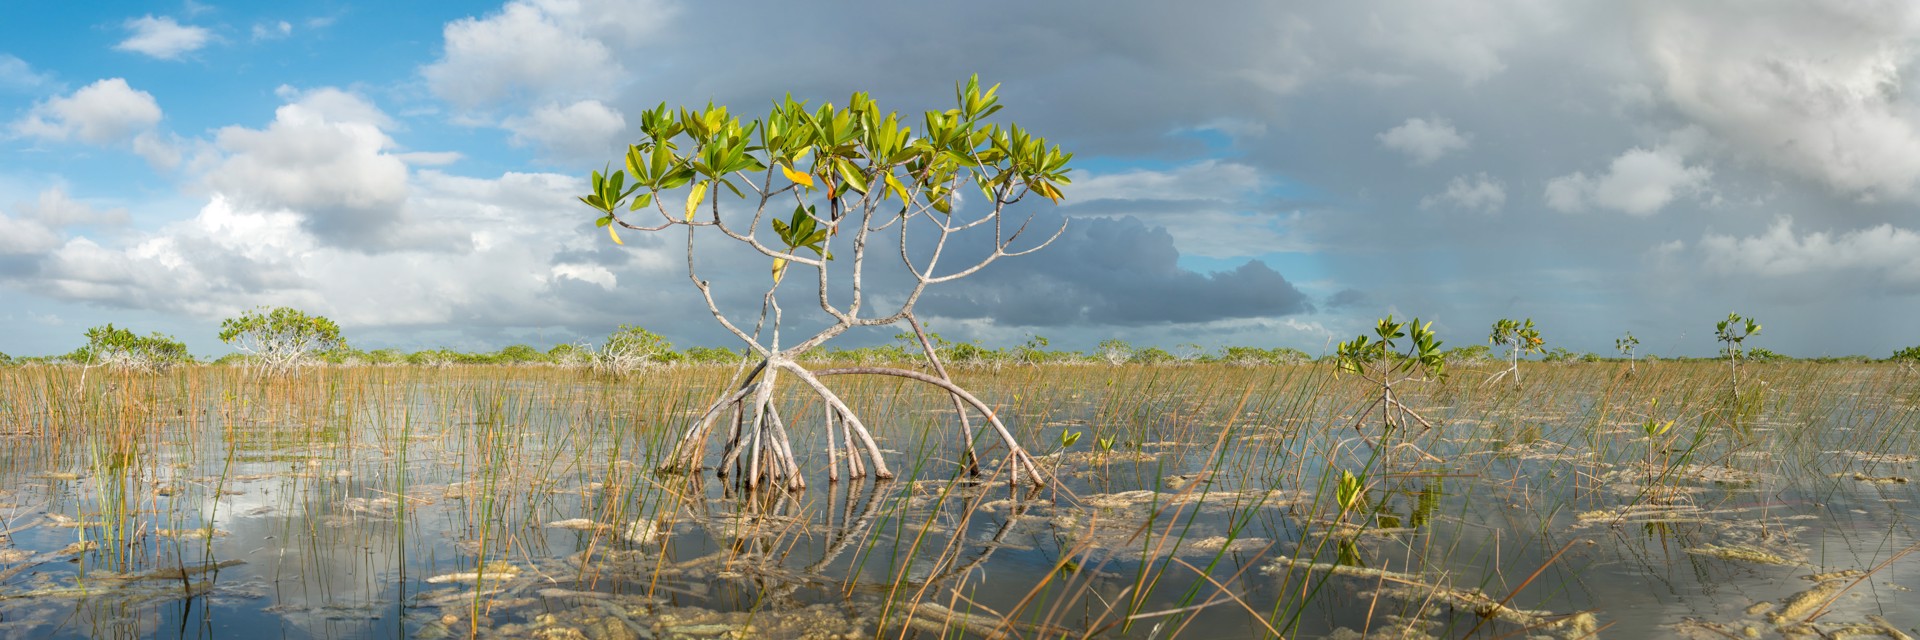 Everglades Mangrove by Carlton Ward Photography